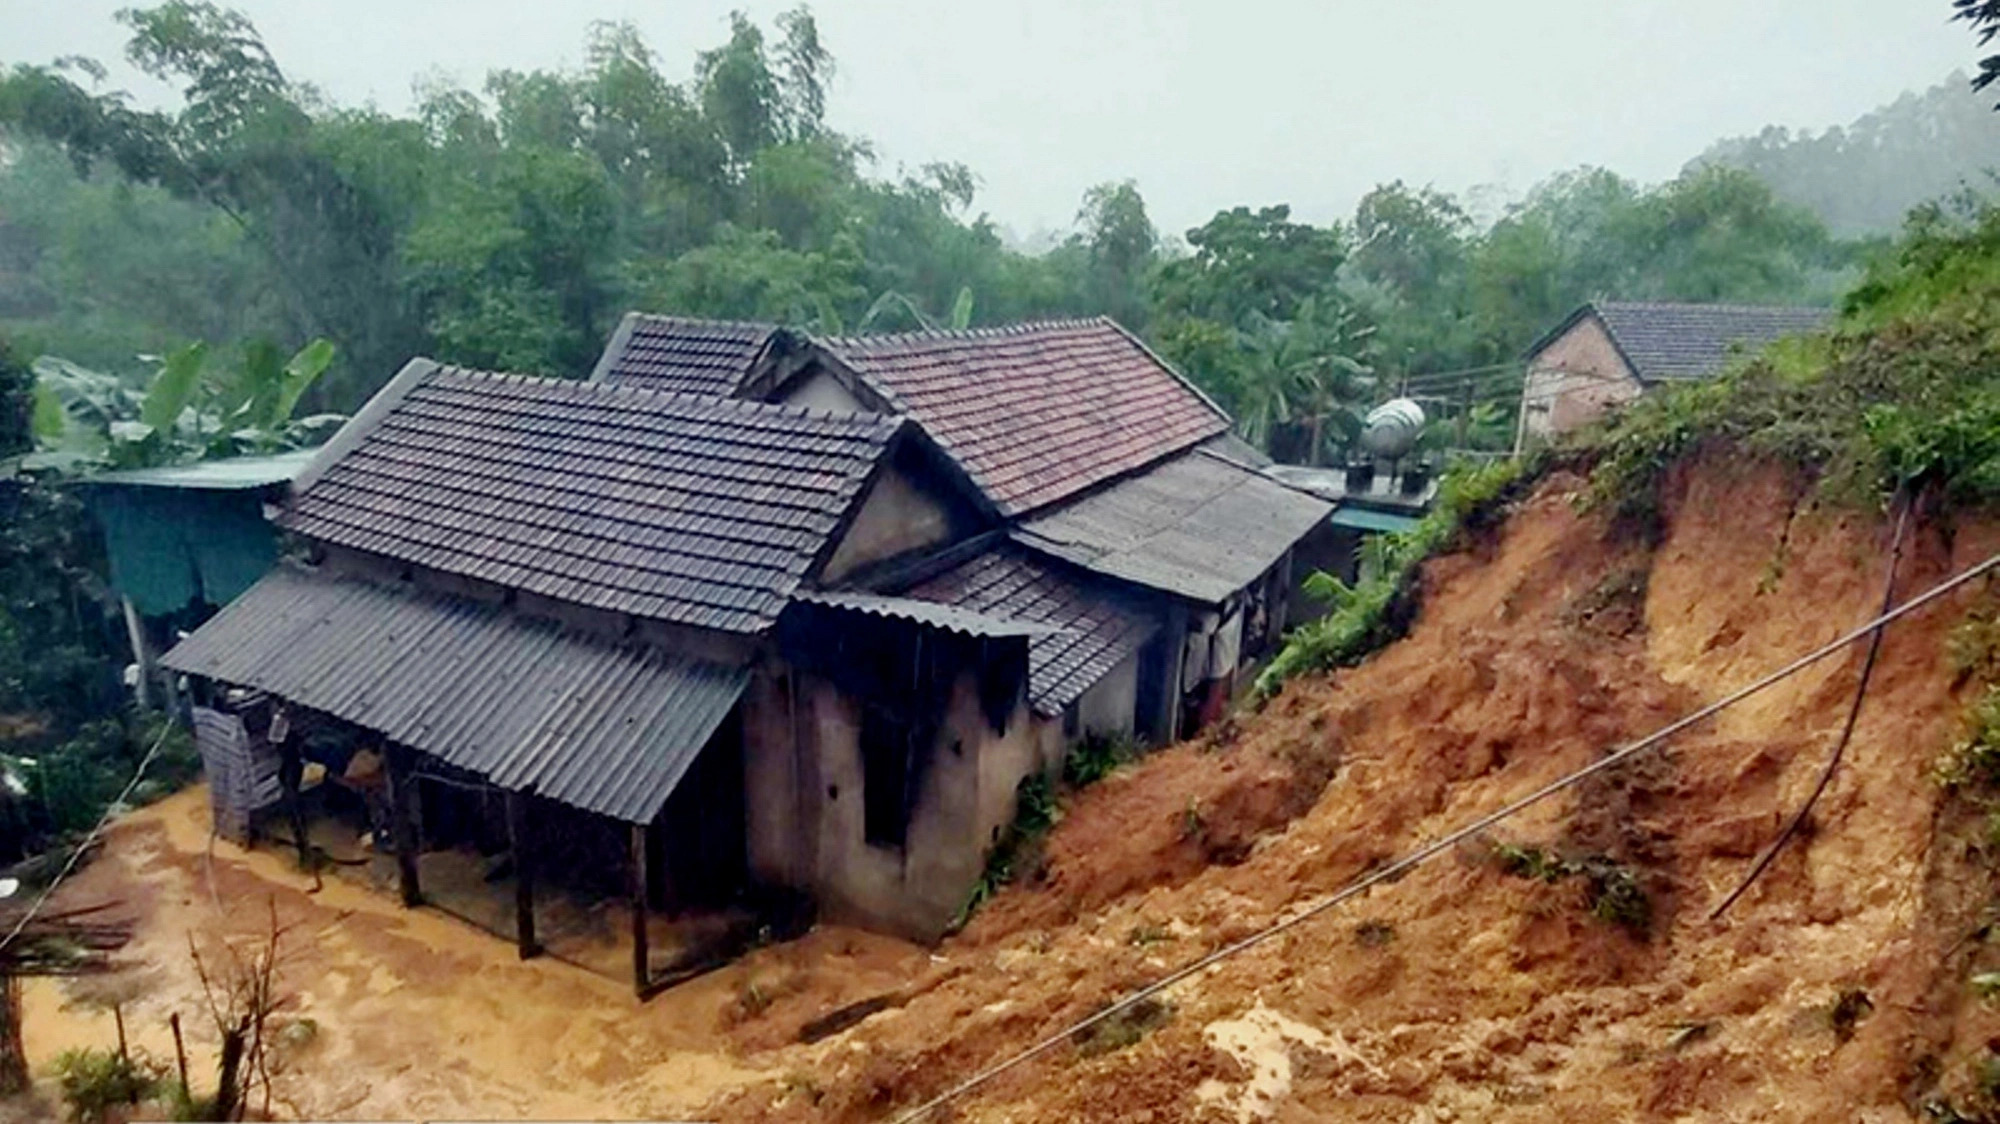 Landslide prompts emergency evacuation of family in central Vietnam